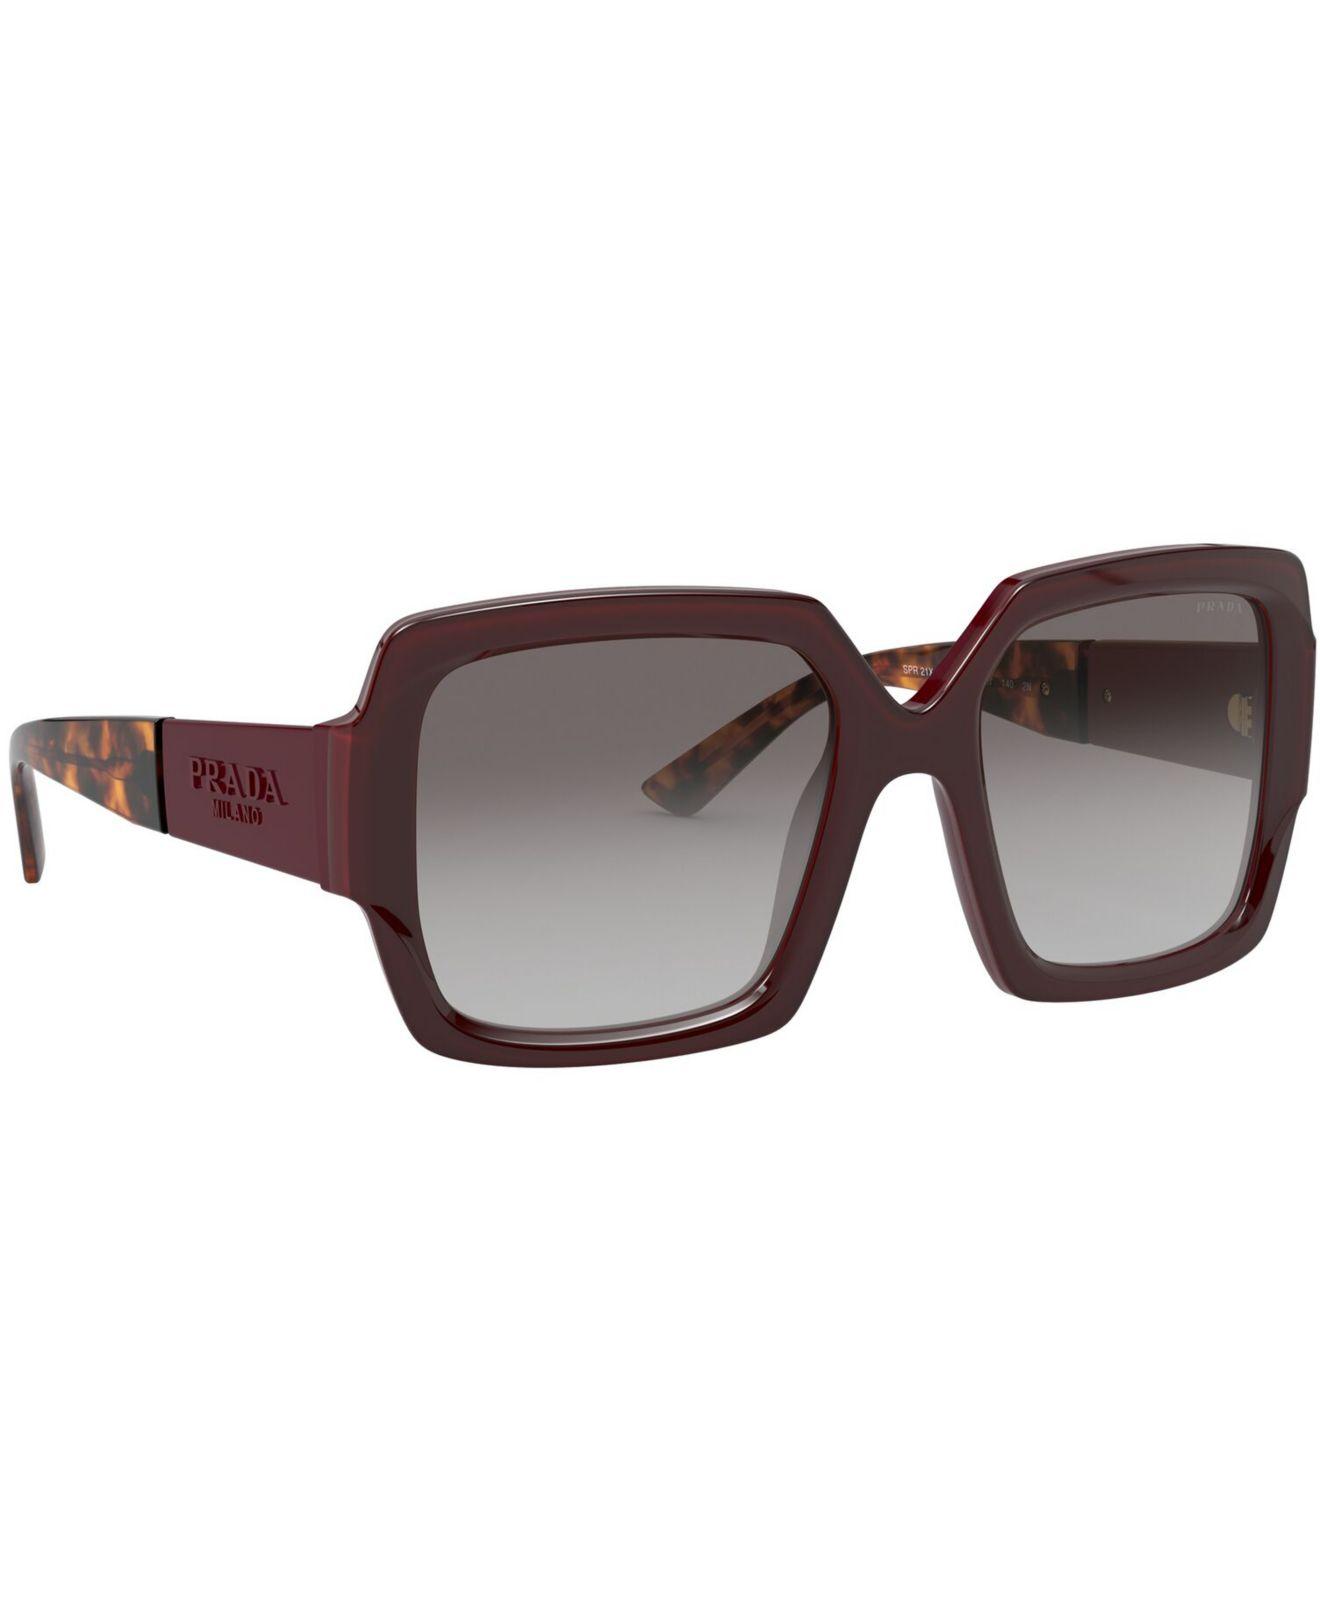 Prada Sunglasses, 0pr 21xs in Brown | Lyst